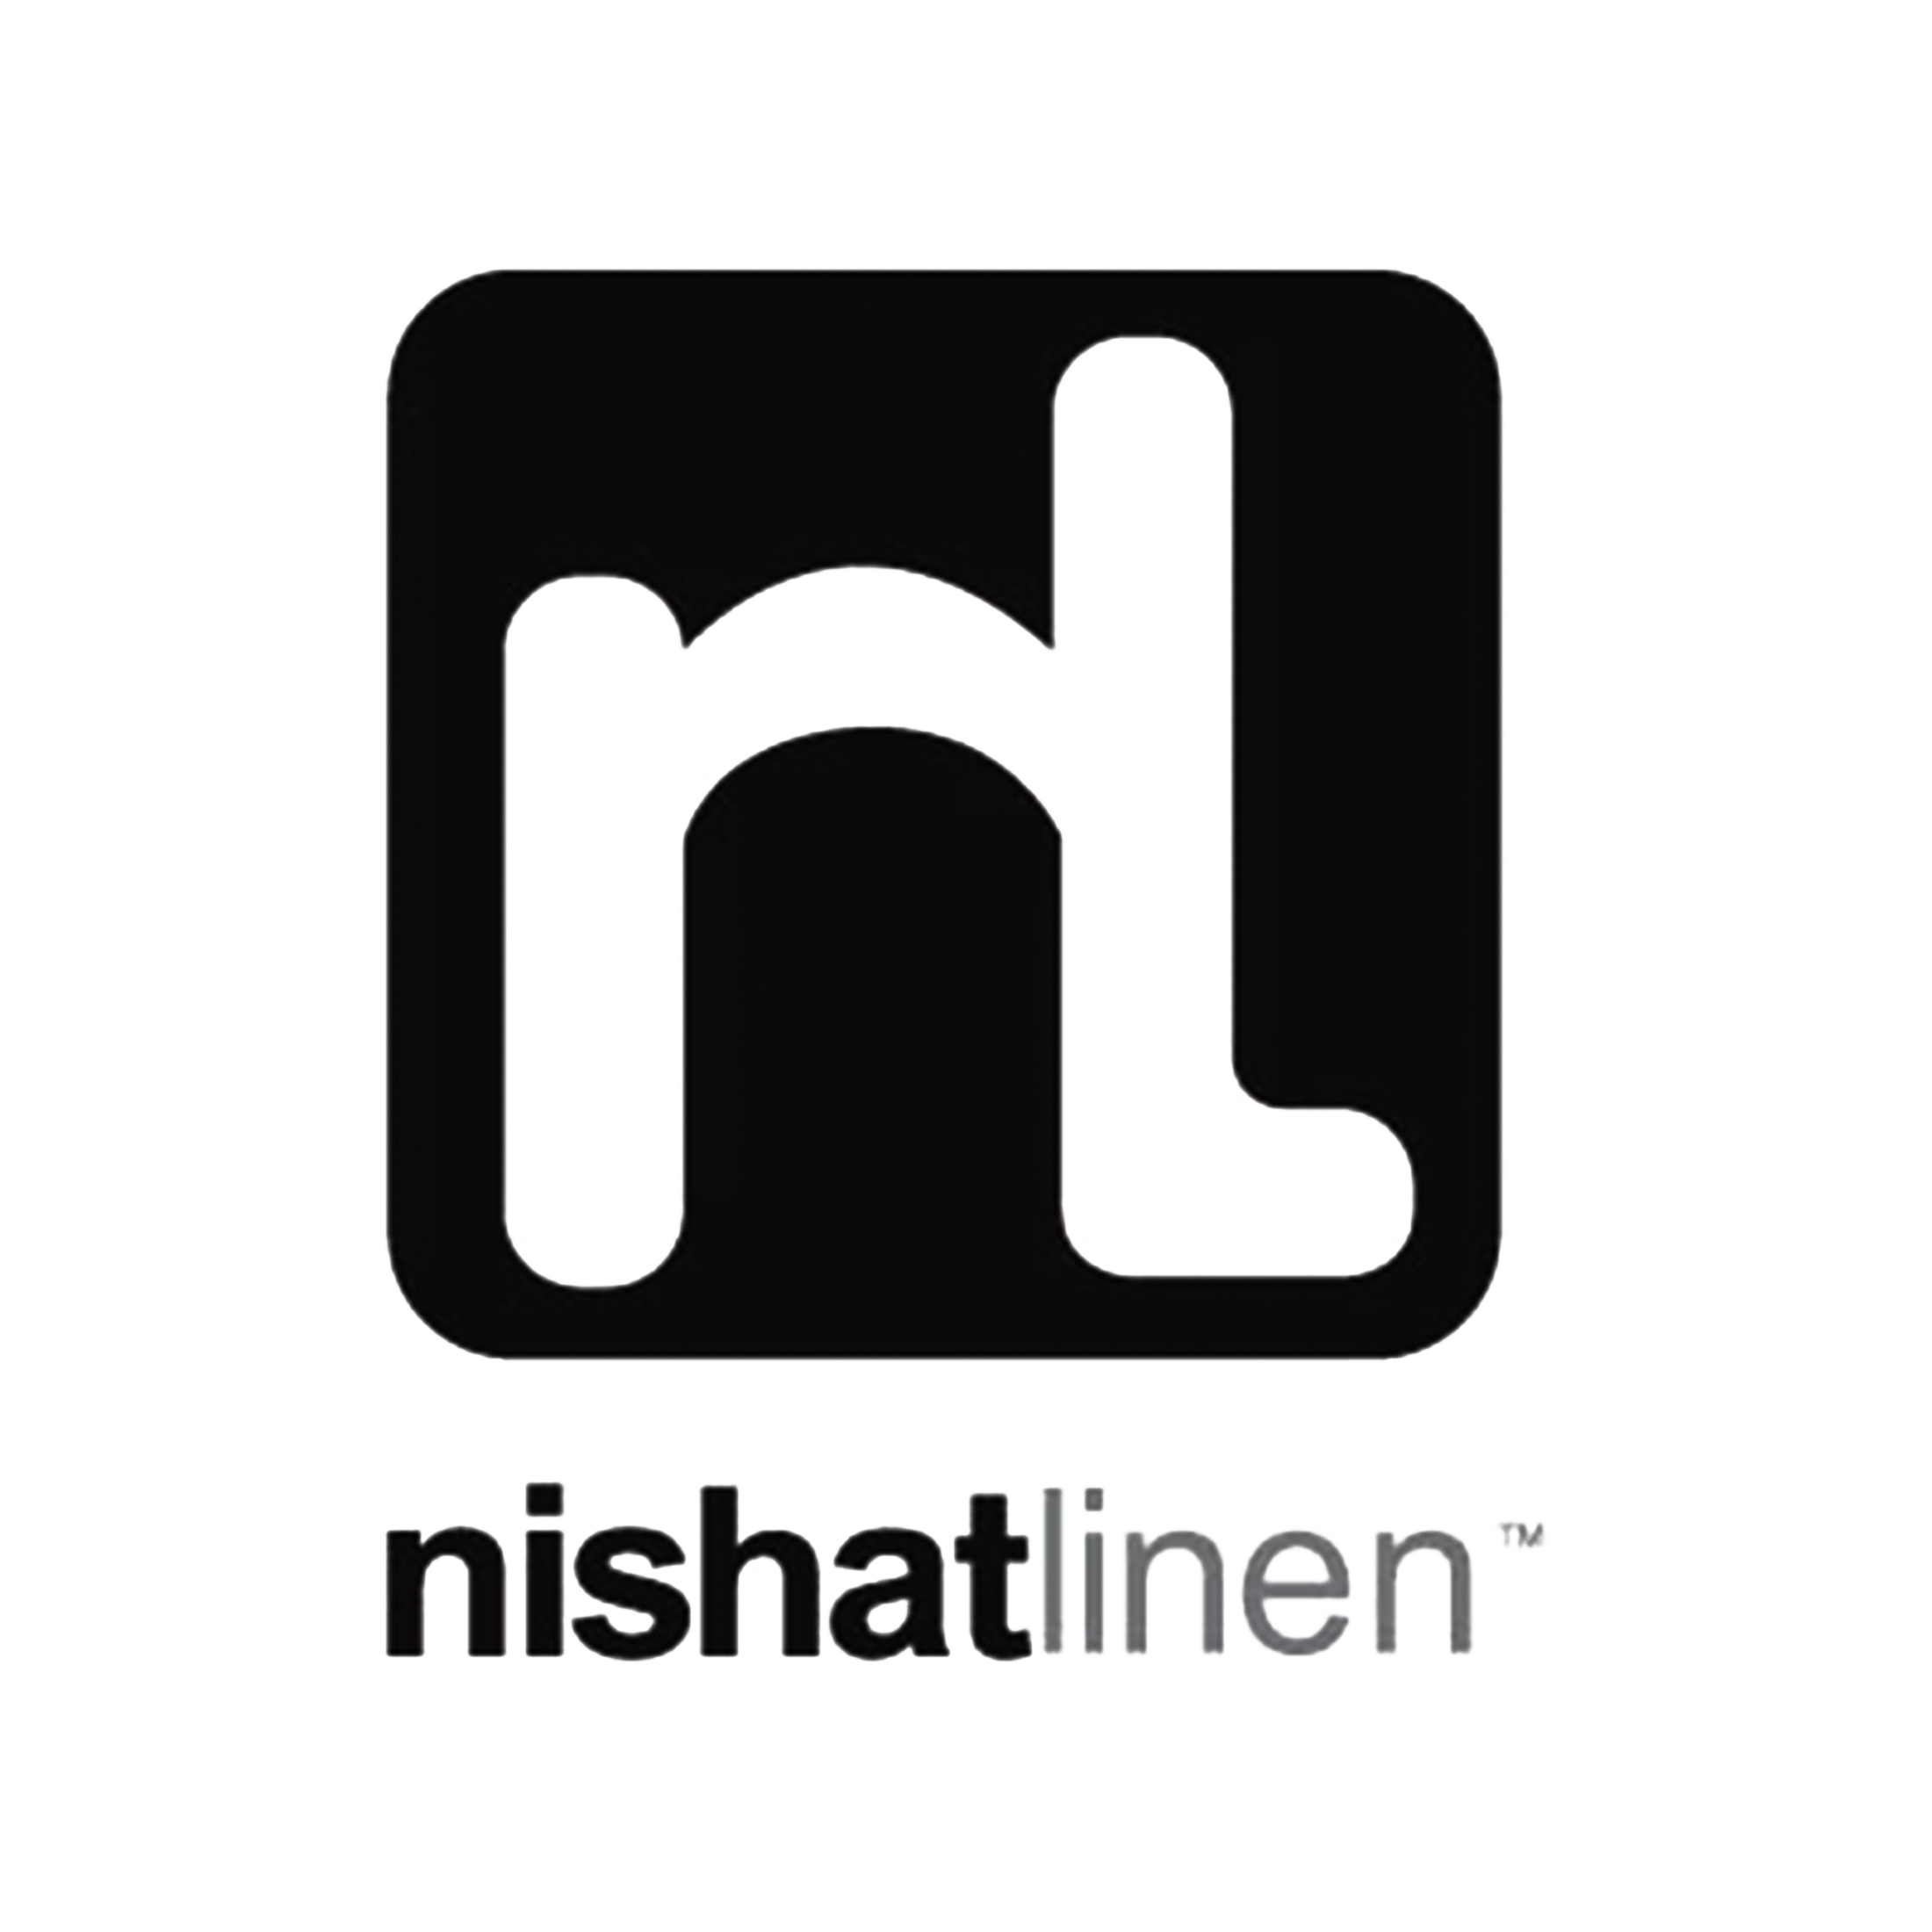 nishat linen